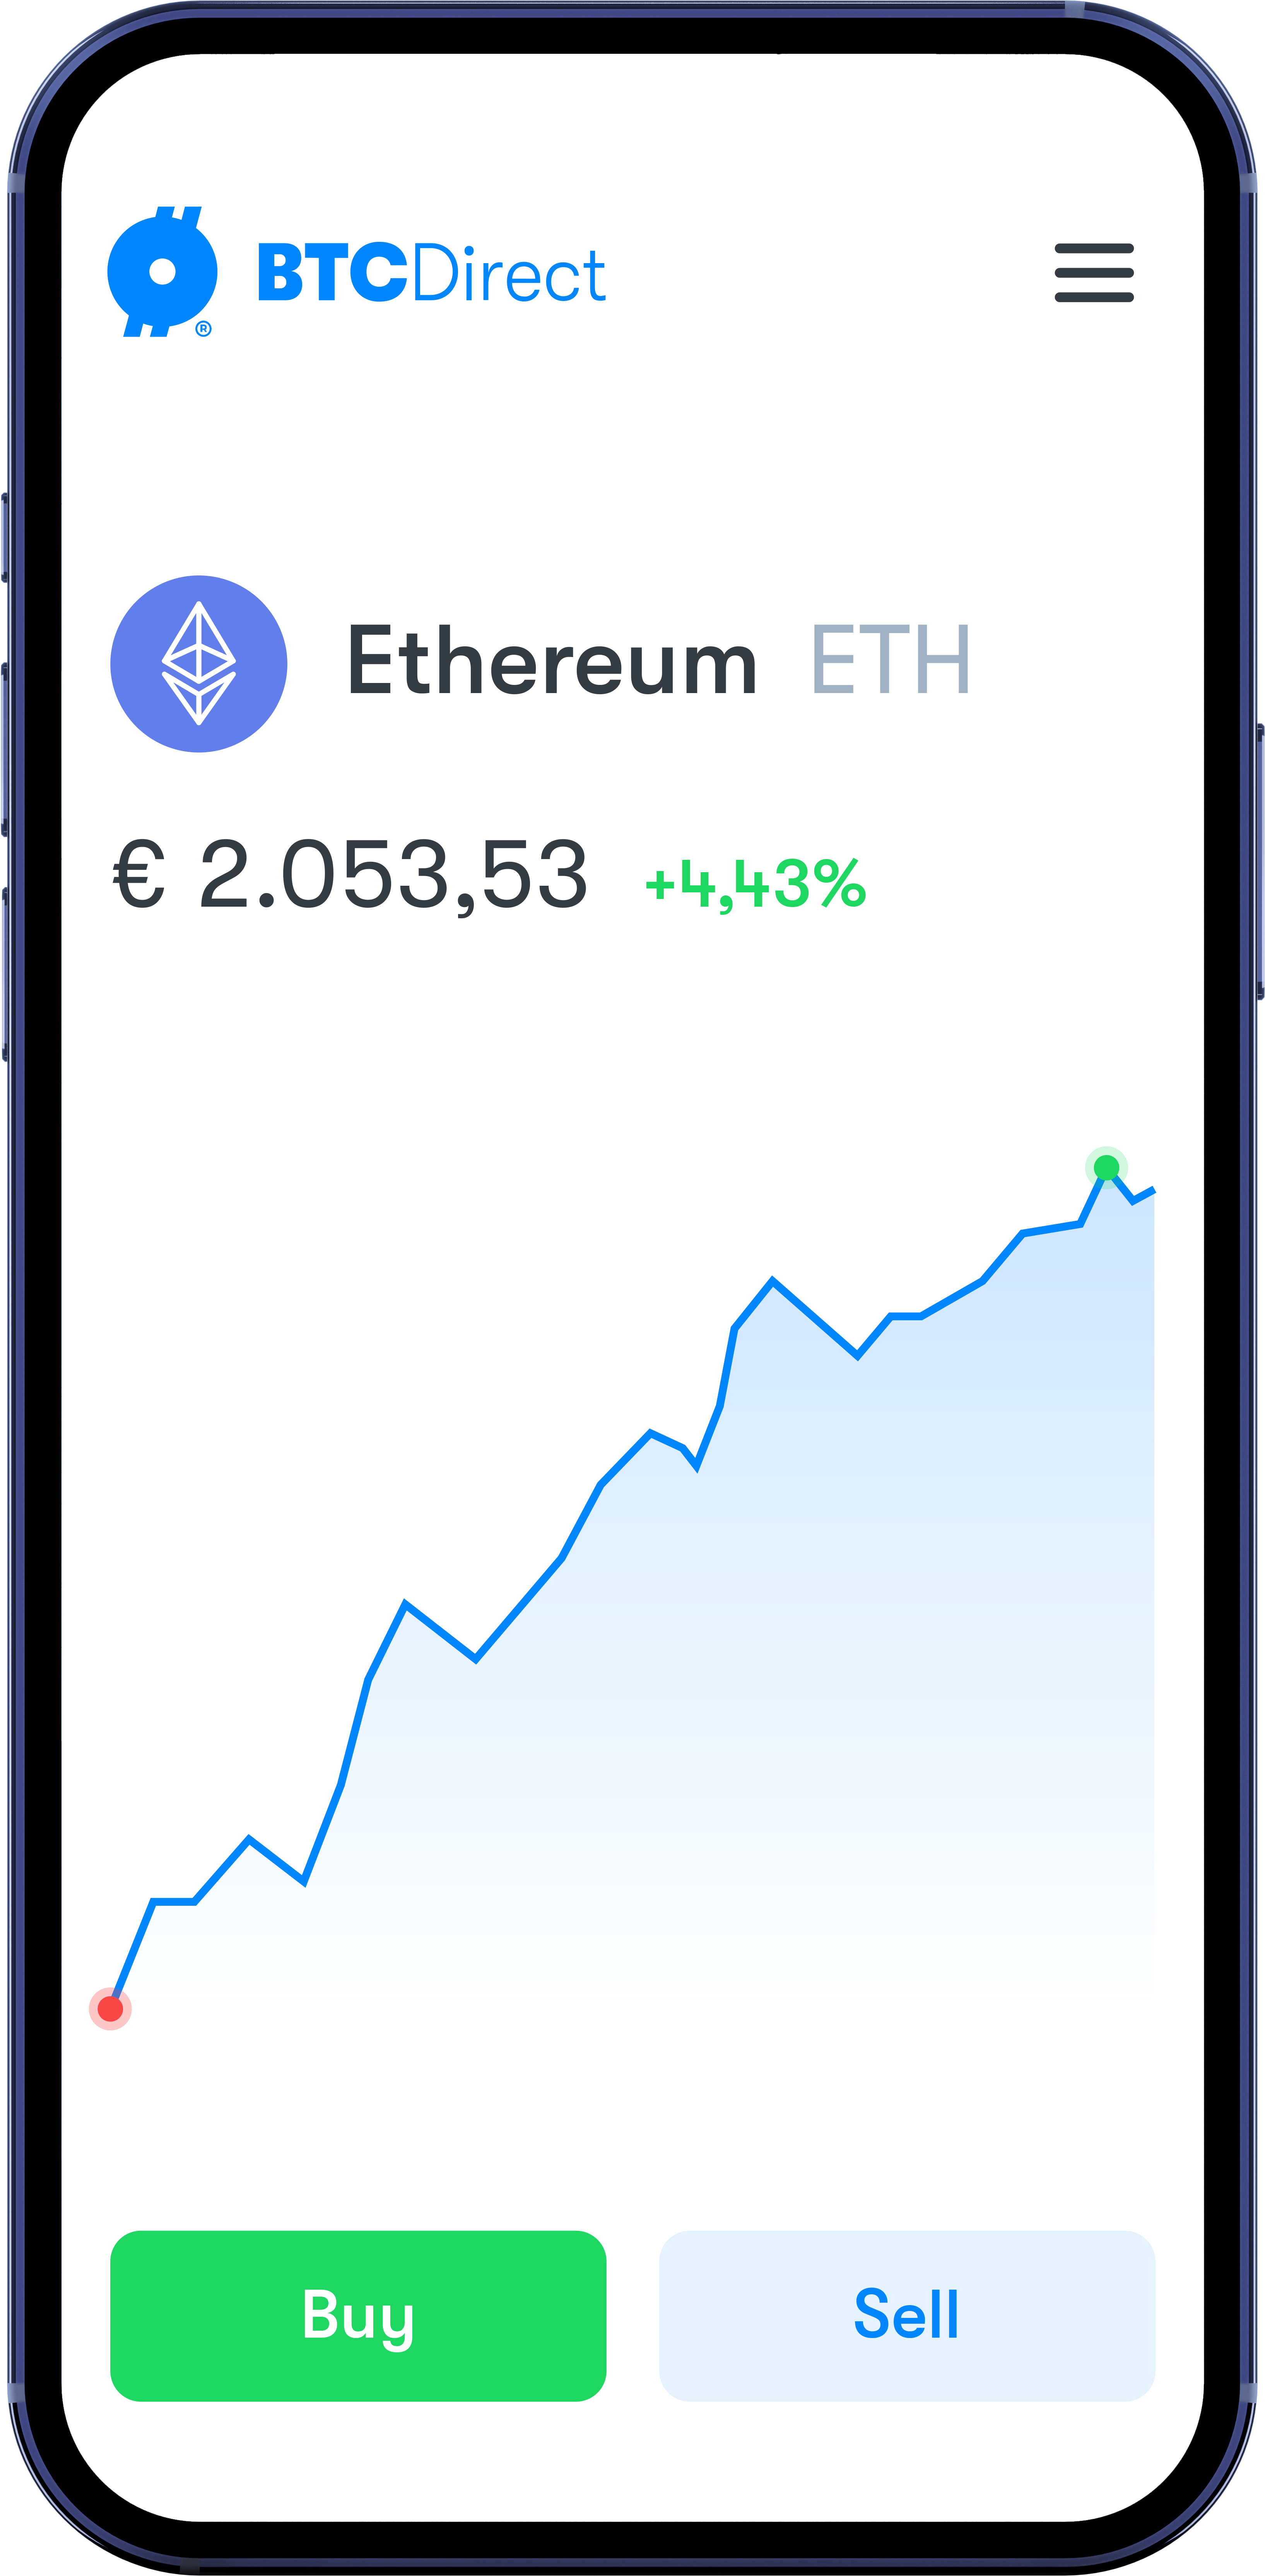 Buying Ethereum is easy